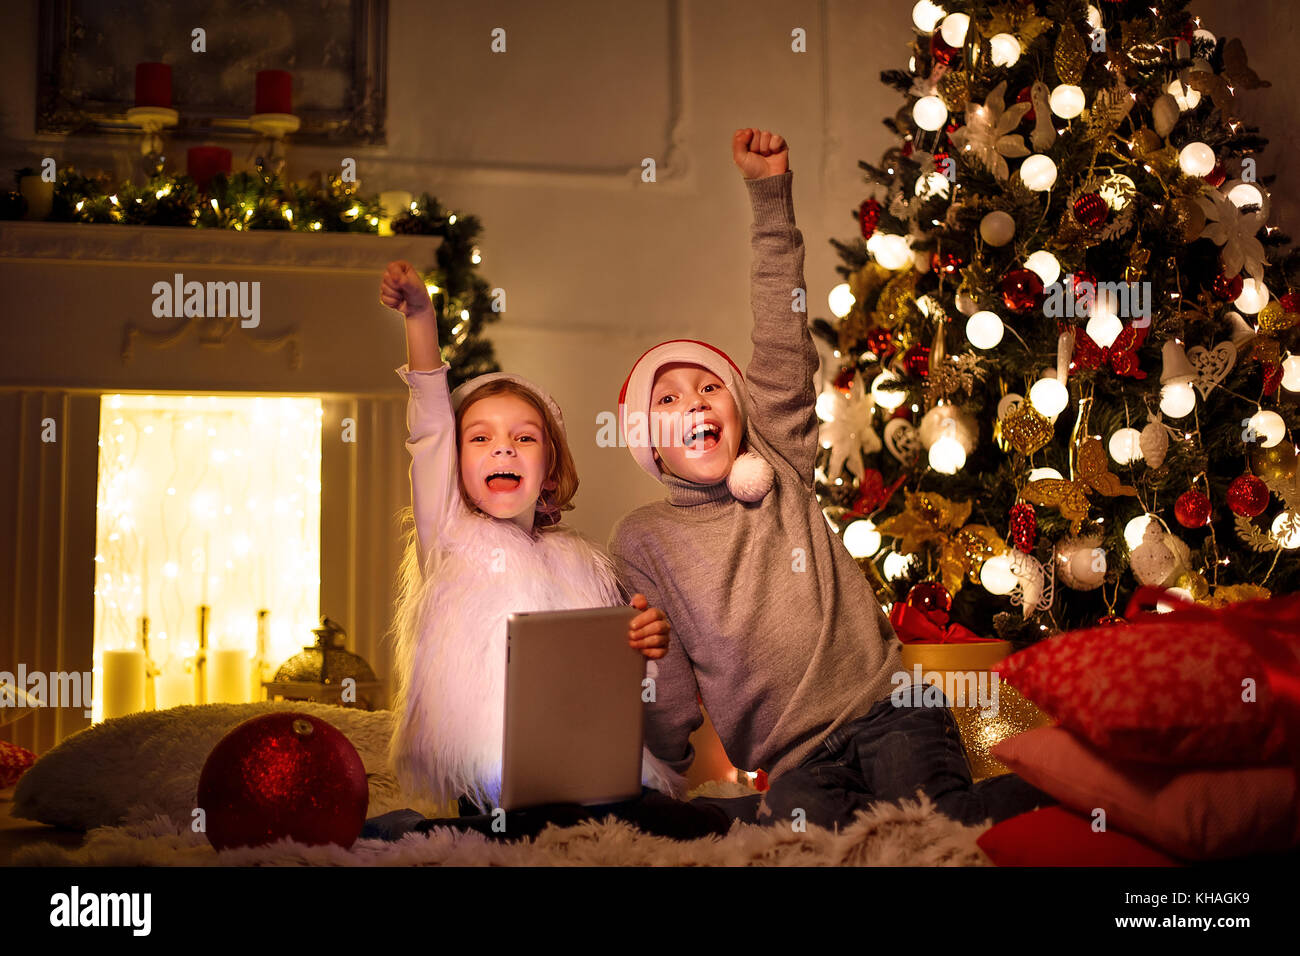 Excited children near Christmas tree Stock Photo